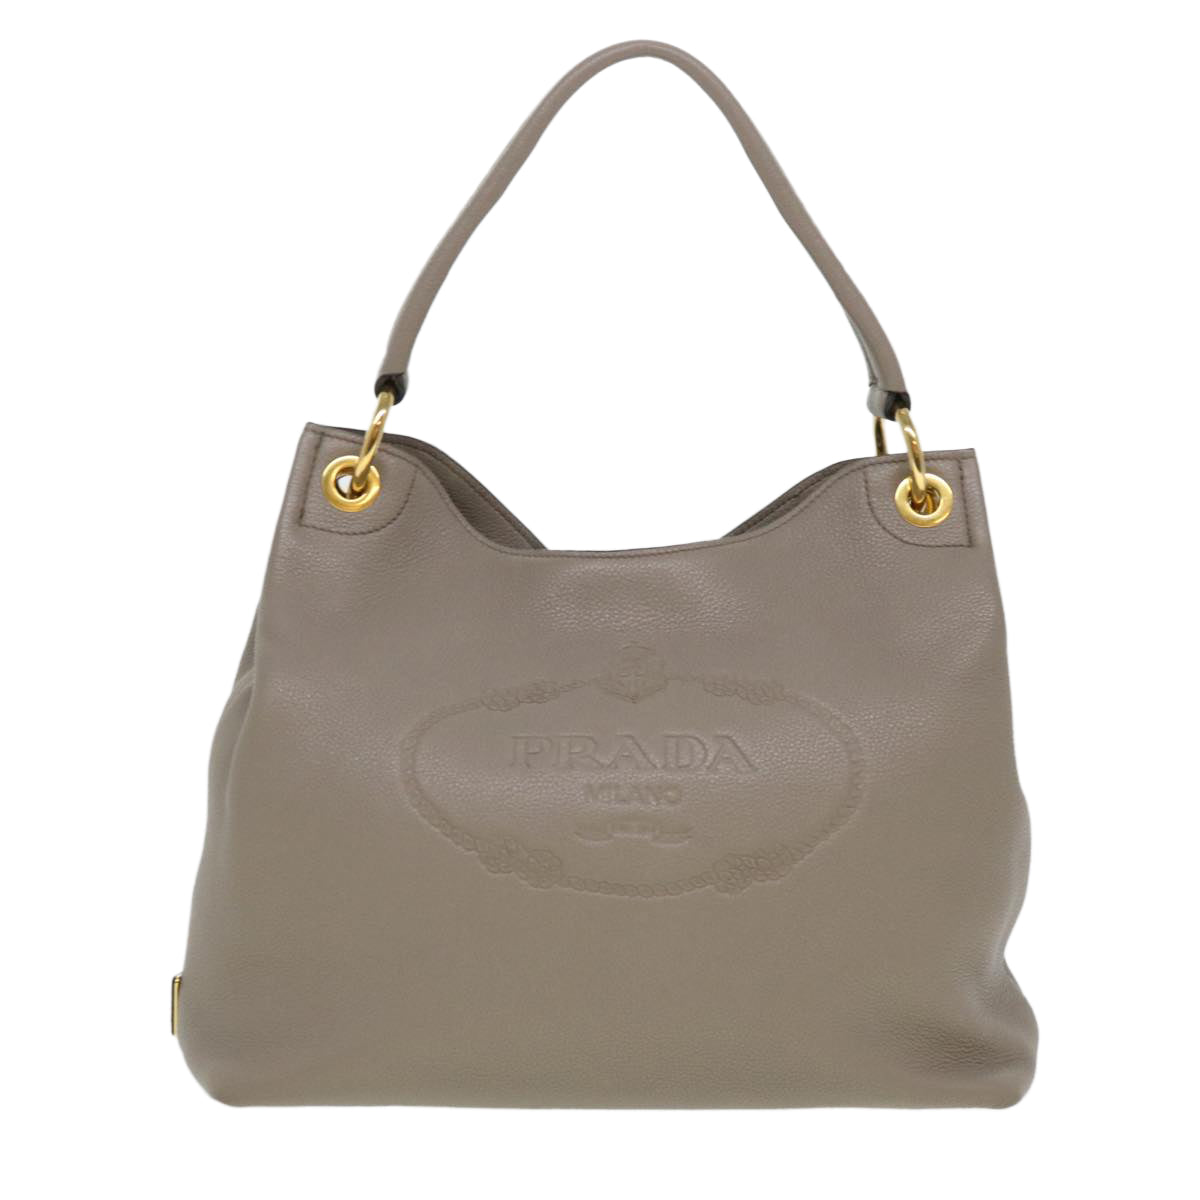 Prada Bags & Handbags - Men | FASHIOLA.co.uk